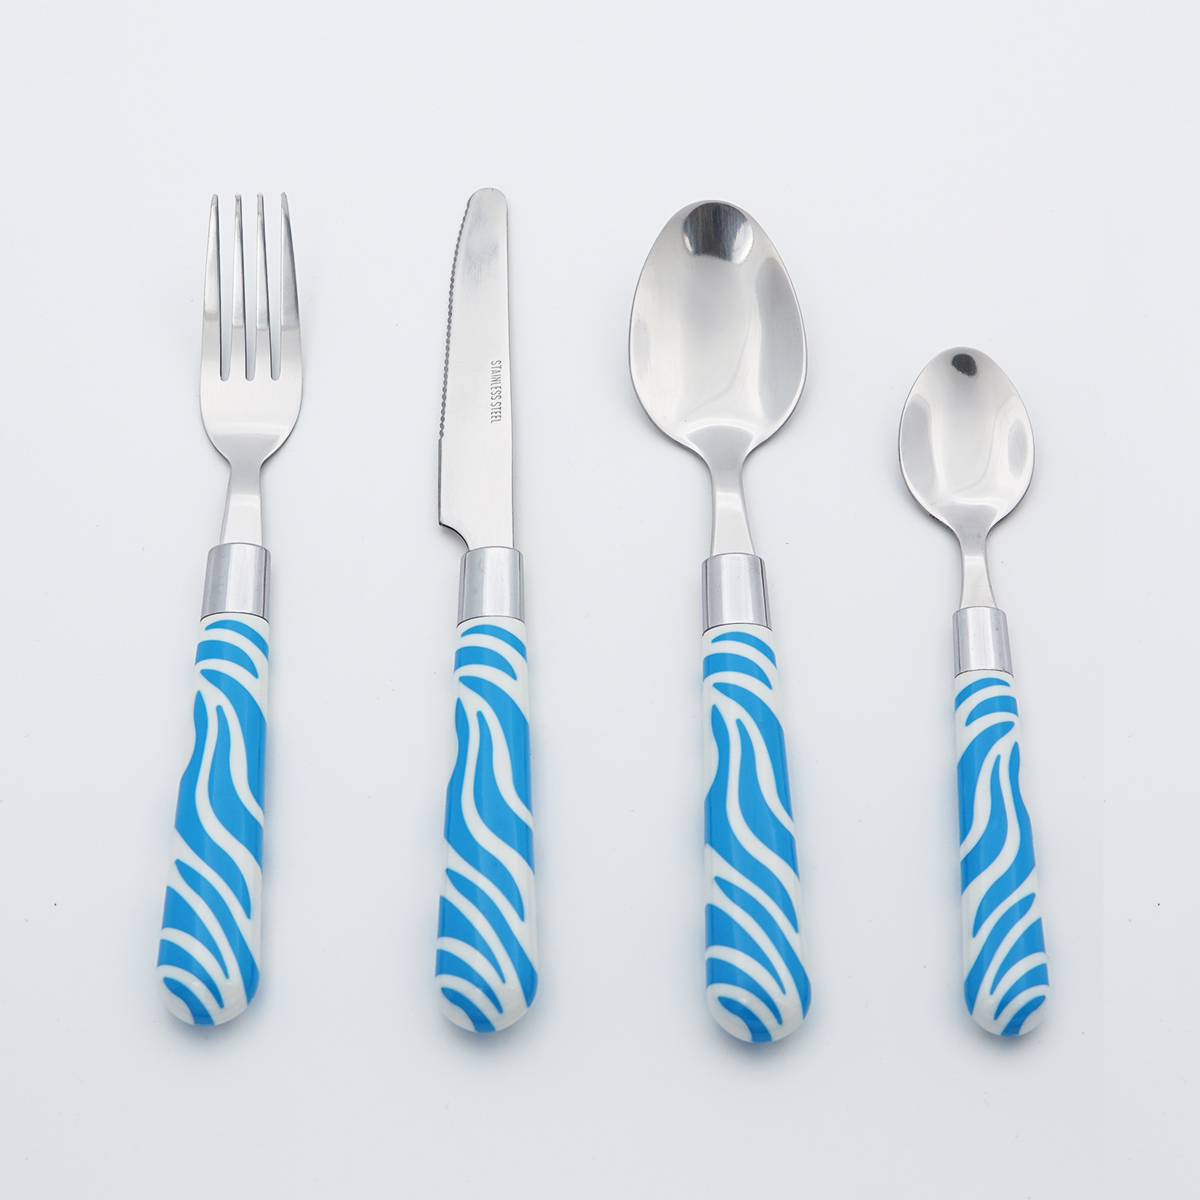 Stainless Steel Cutlery Plastic Handle Wholesale Food Grade Flatware Mirror Polish Silverware Set for Restaurant Hotel